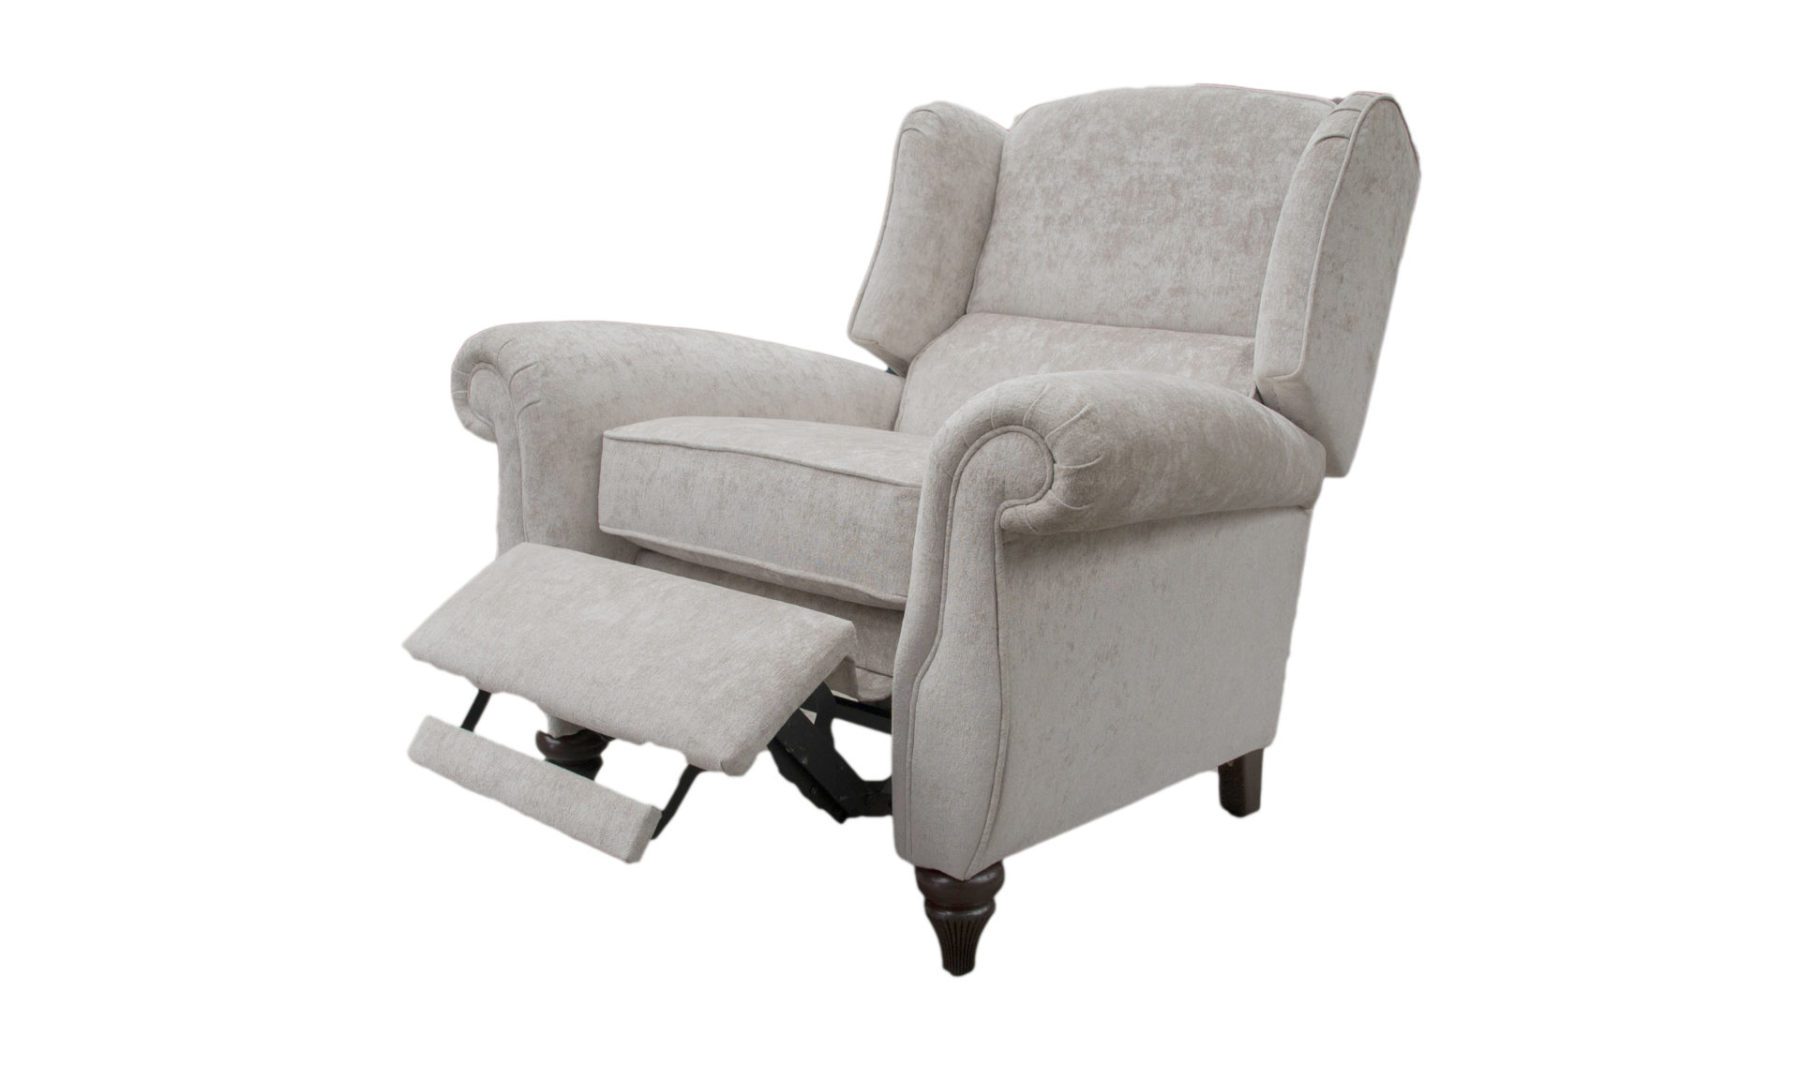 Greville Recliner Chair in Cristina Marrone Nuovo Stone 2046, Platinum Plus Collection of Fabrics